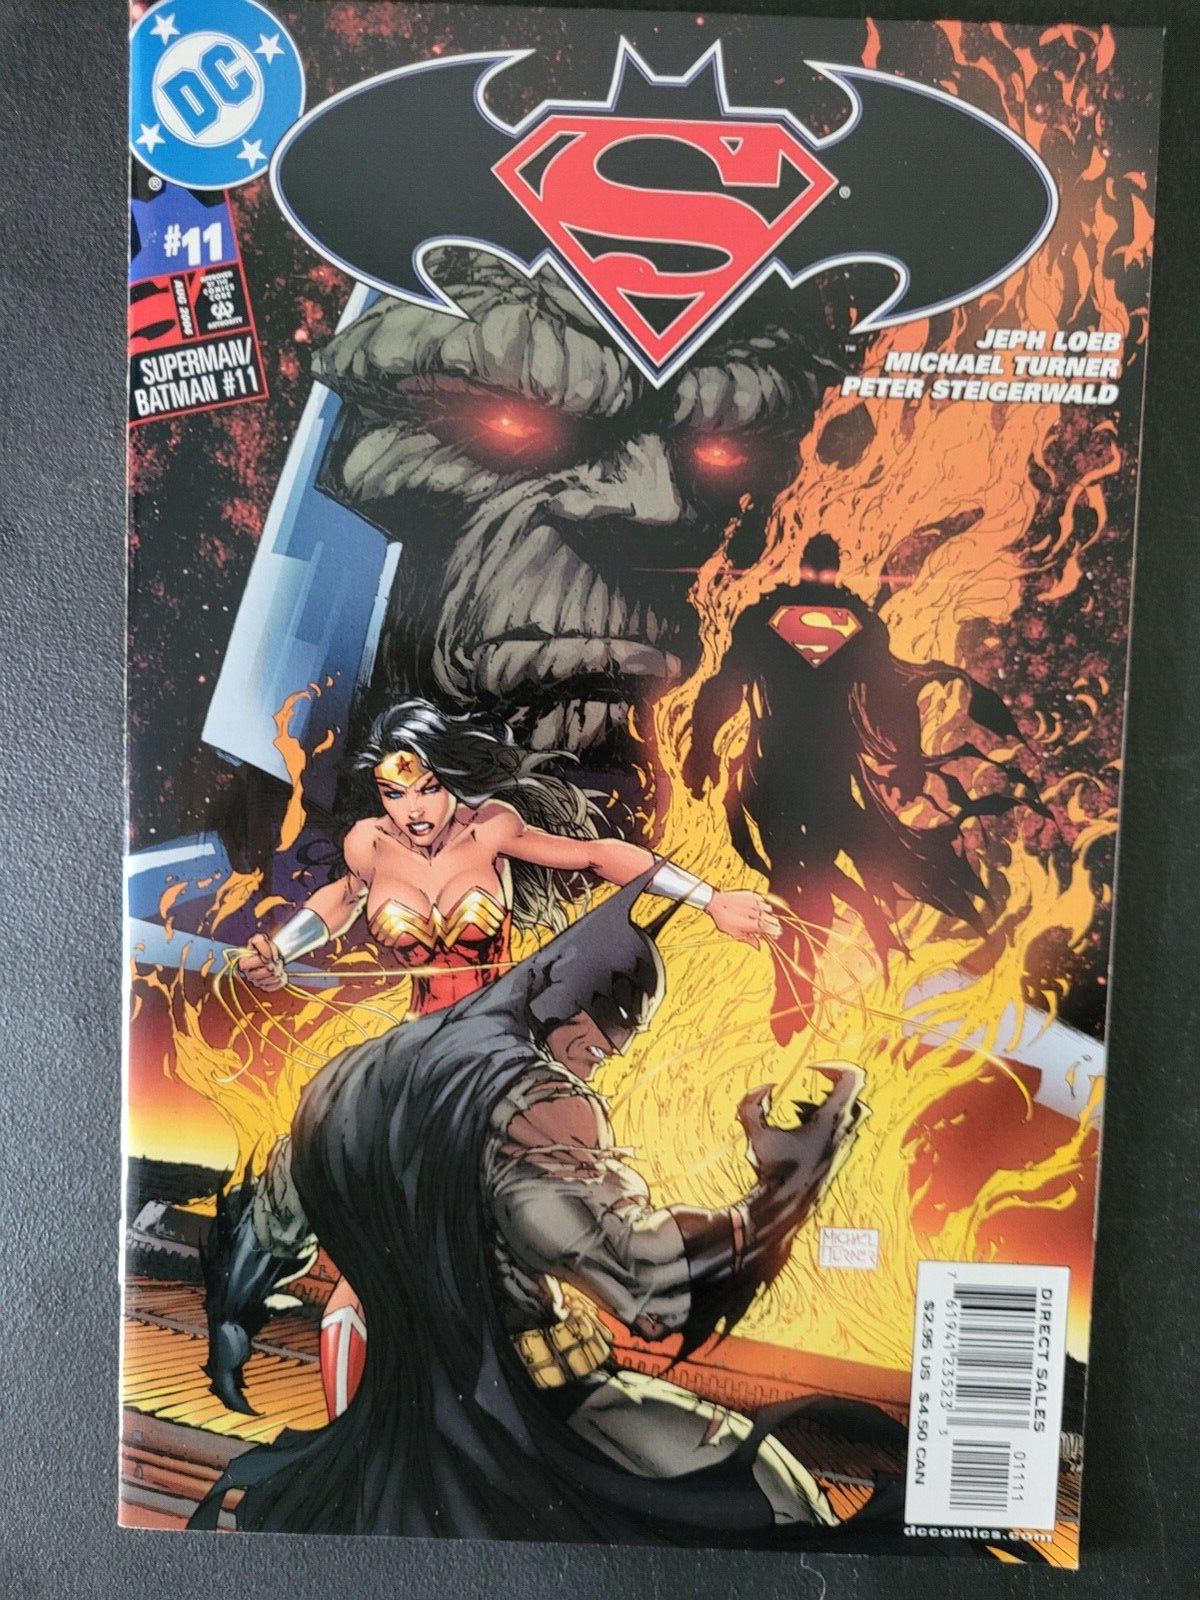 SUPERMAN BATMAN #11 (2004) MICHAEL TURNER COVER & ART KARA ZOR-EL SUPERGIRL